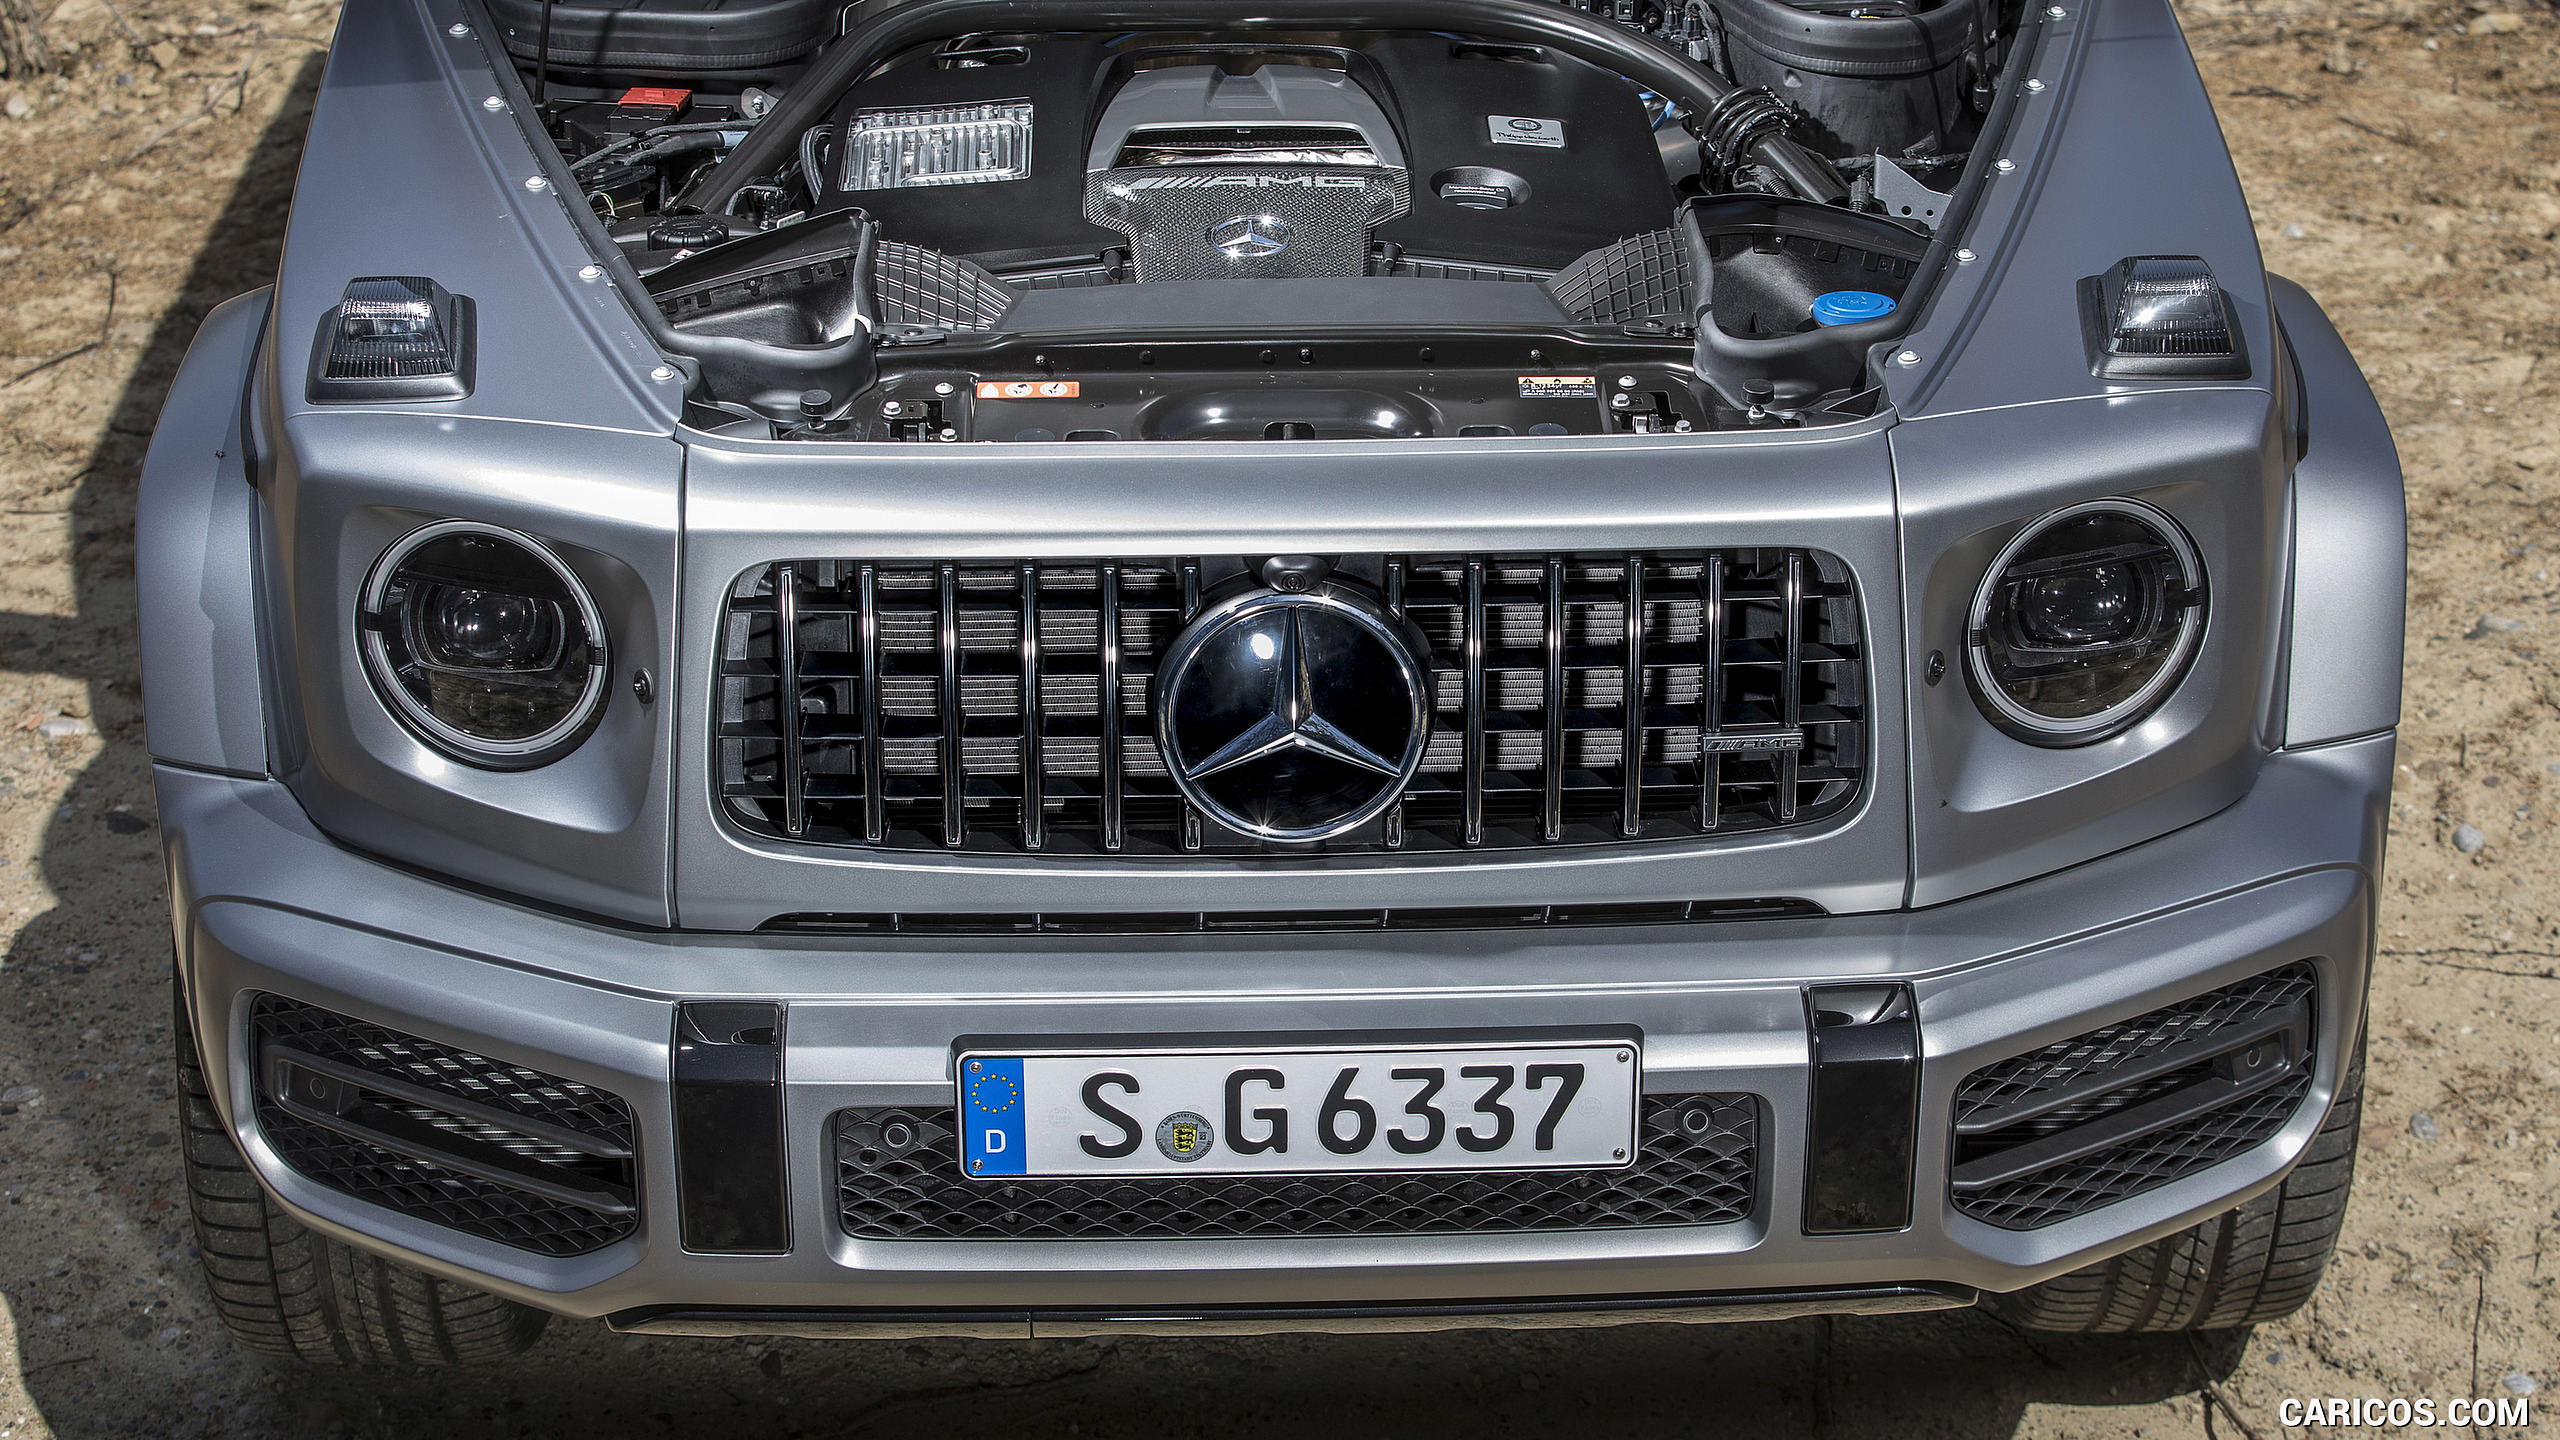 2019 Mercedes-AMG G63 - Engine, #186 of 452